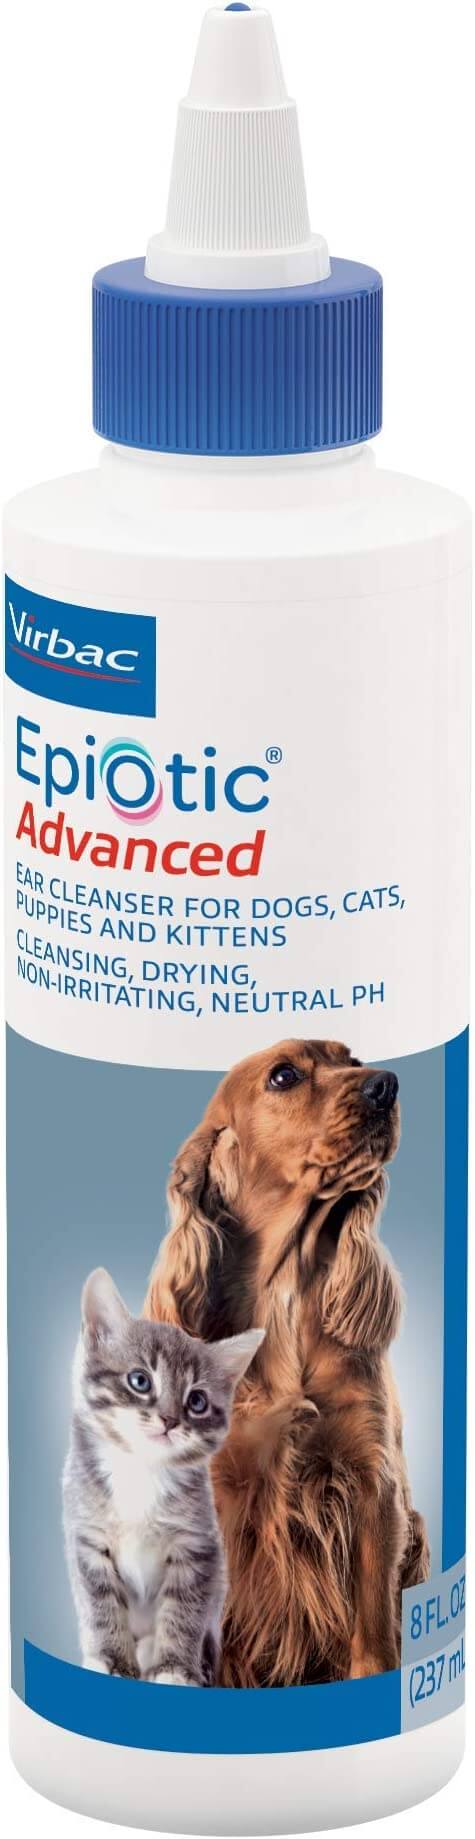 Virbac Epi-Otic Advanced Ear Cleanser for Cats